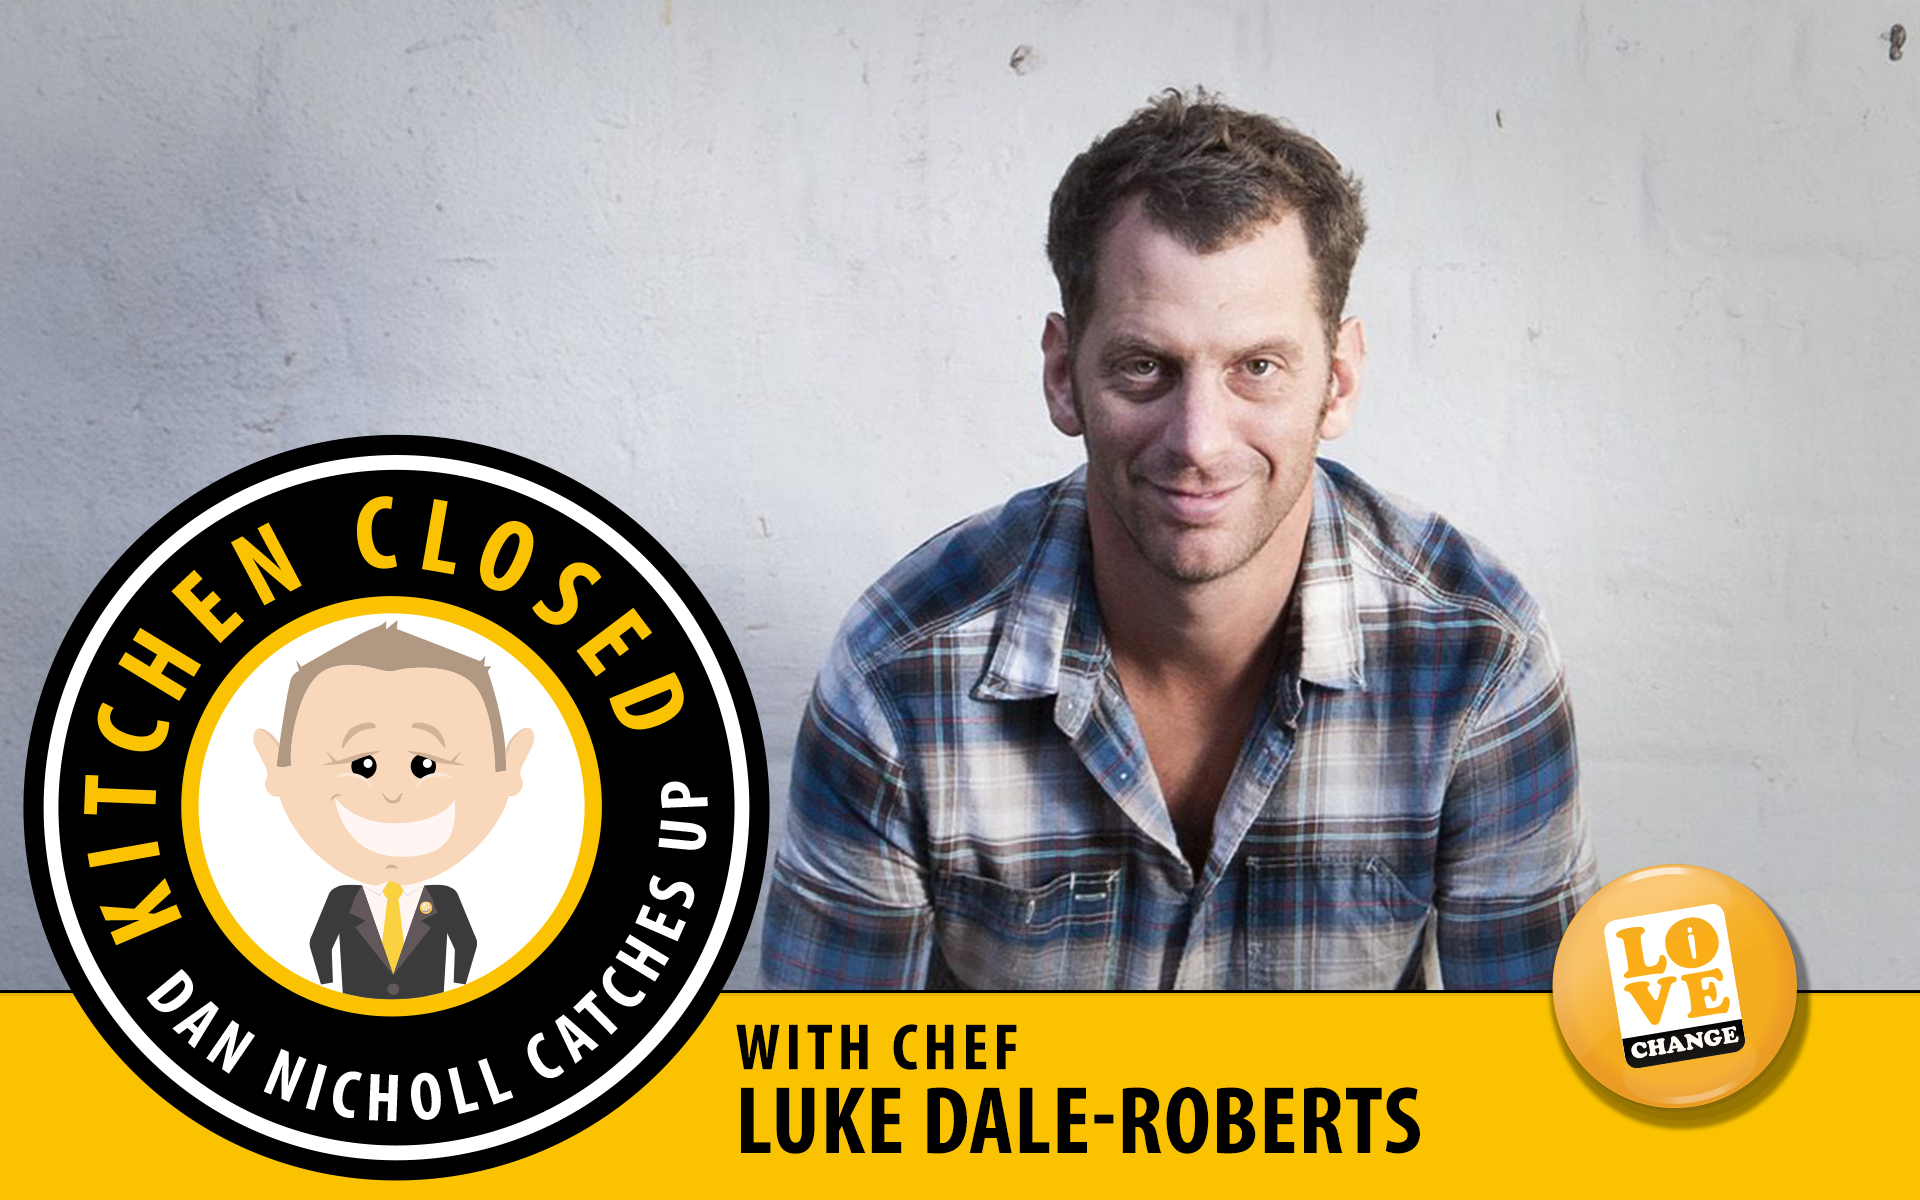 Kitchen Closed: Dan Nicholl cooks with Chef Luke Dale Roberts